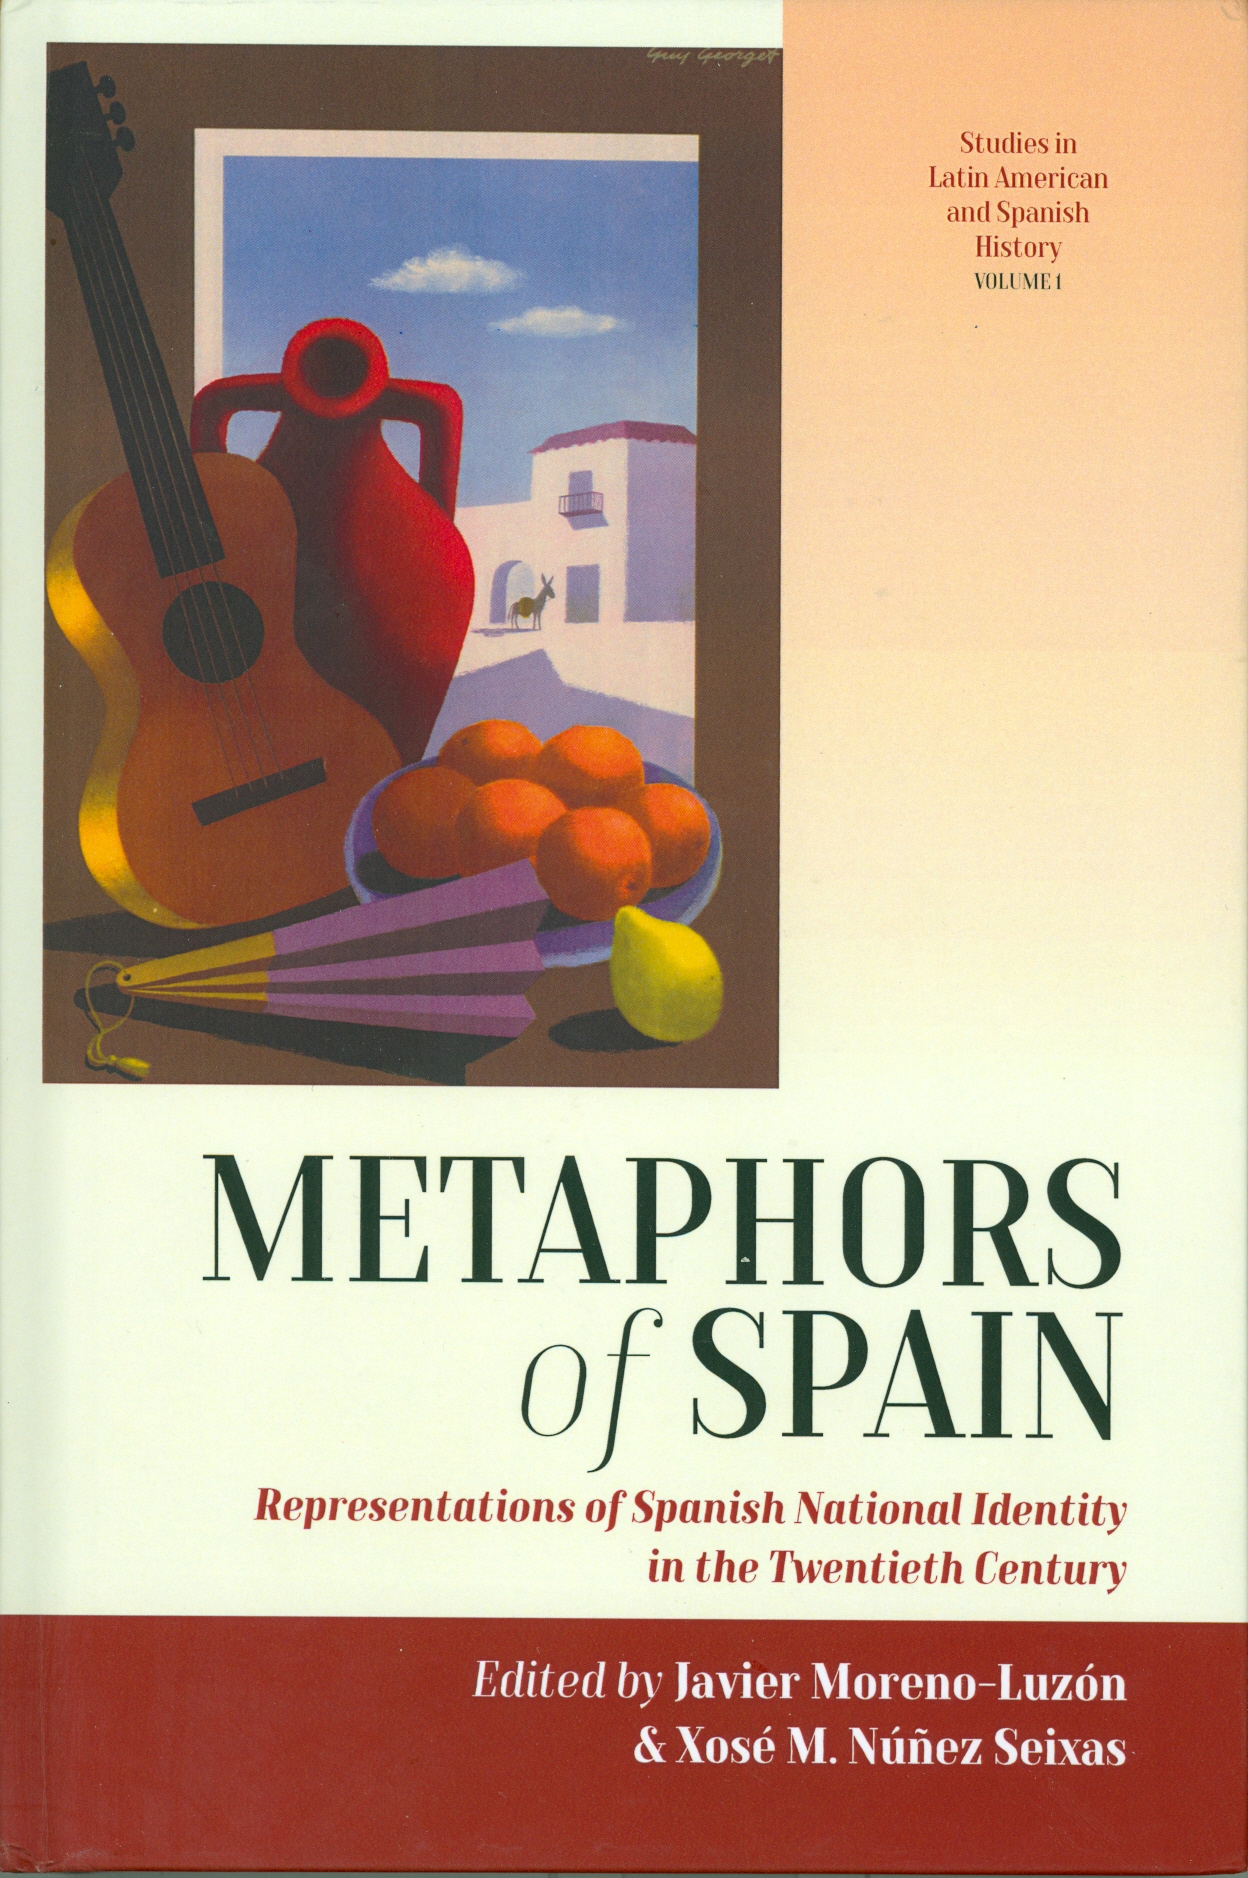 "Metaphors of Spain. Representations of Spanish National Identity in the Twentieth Century", nuevo libro de Javier Moreno Luzón